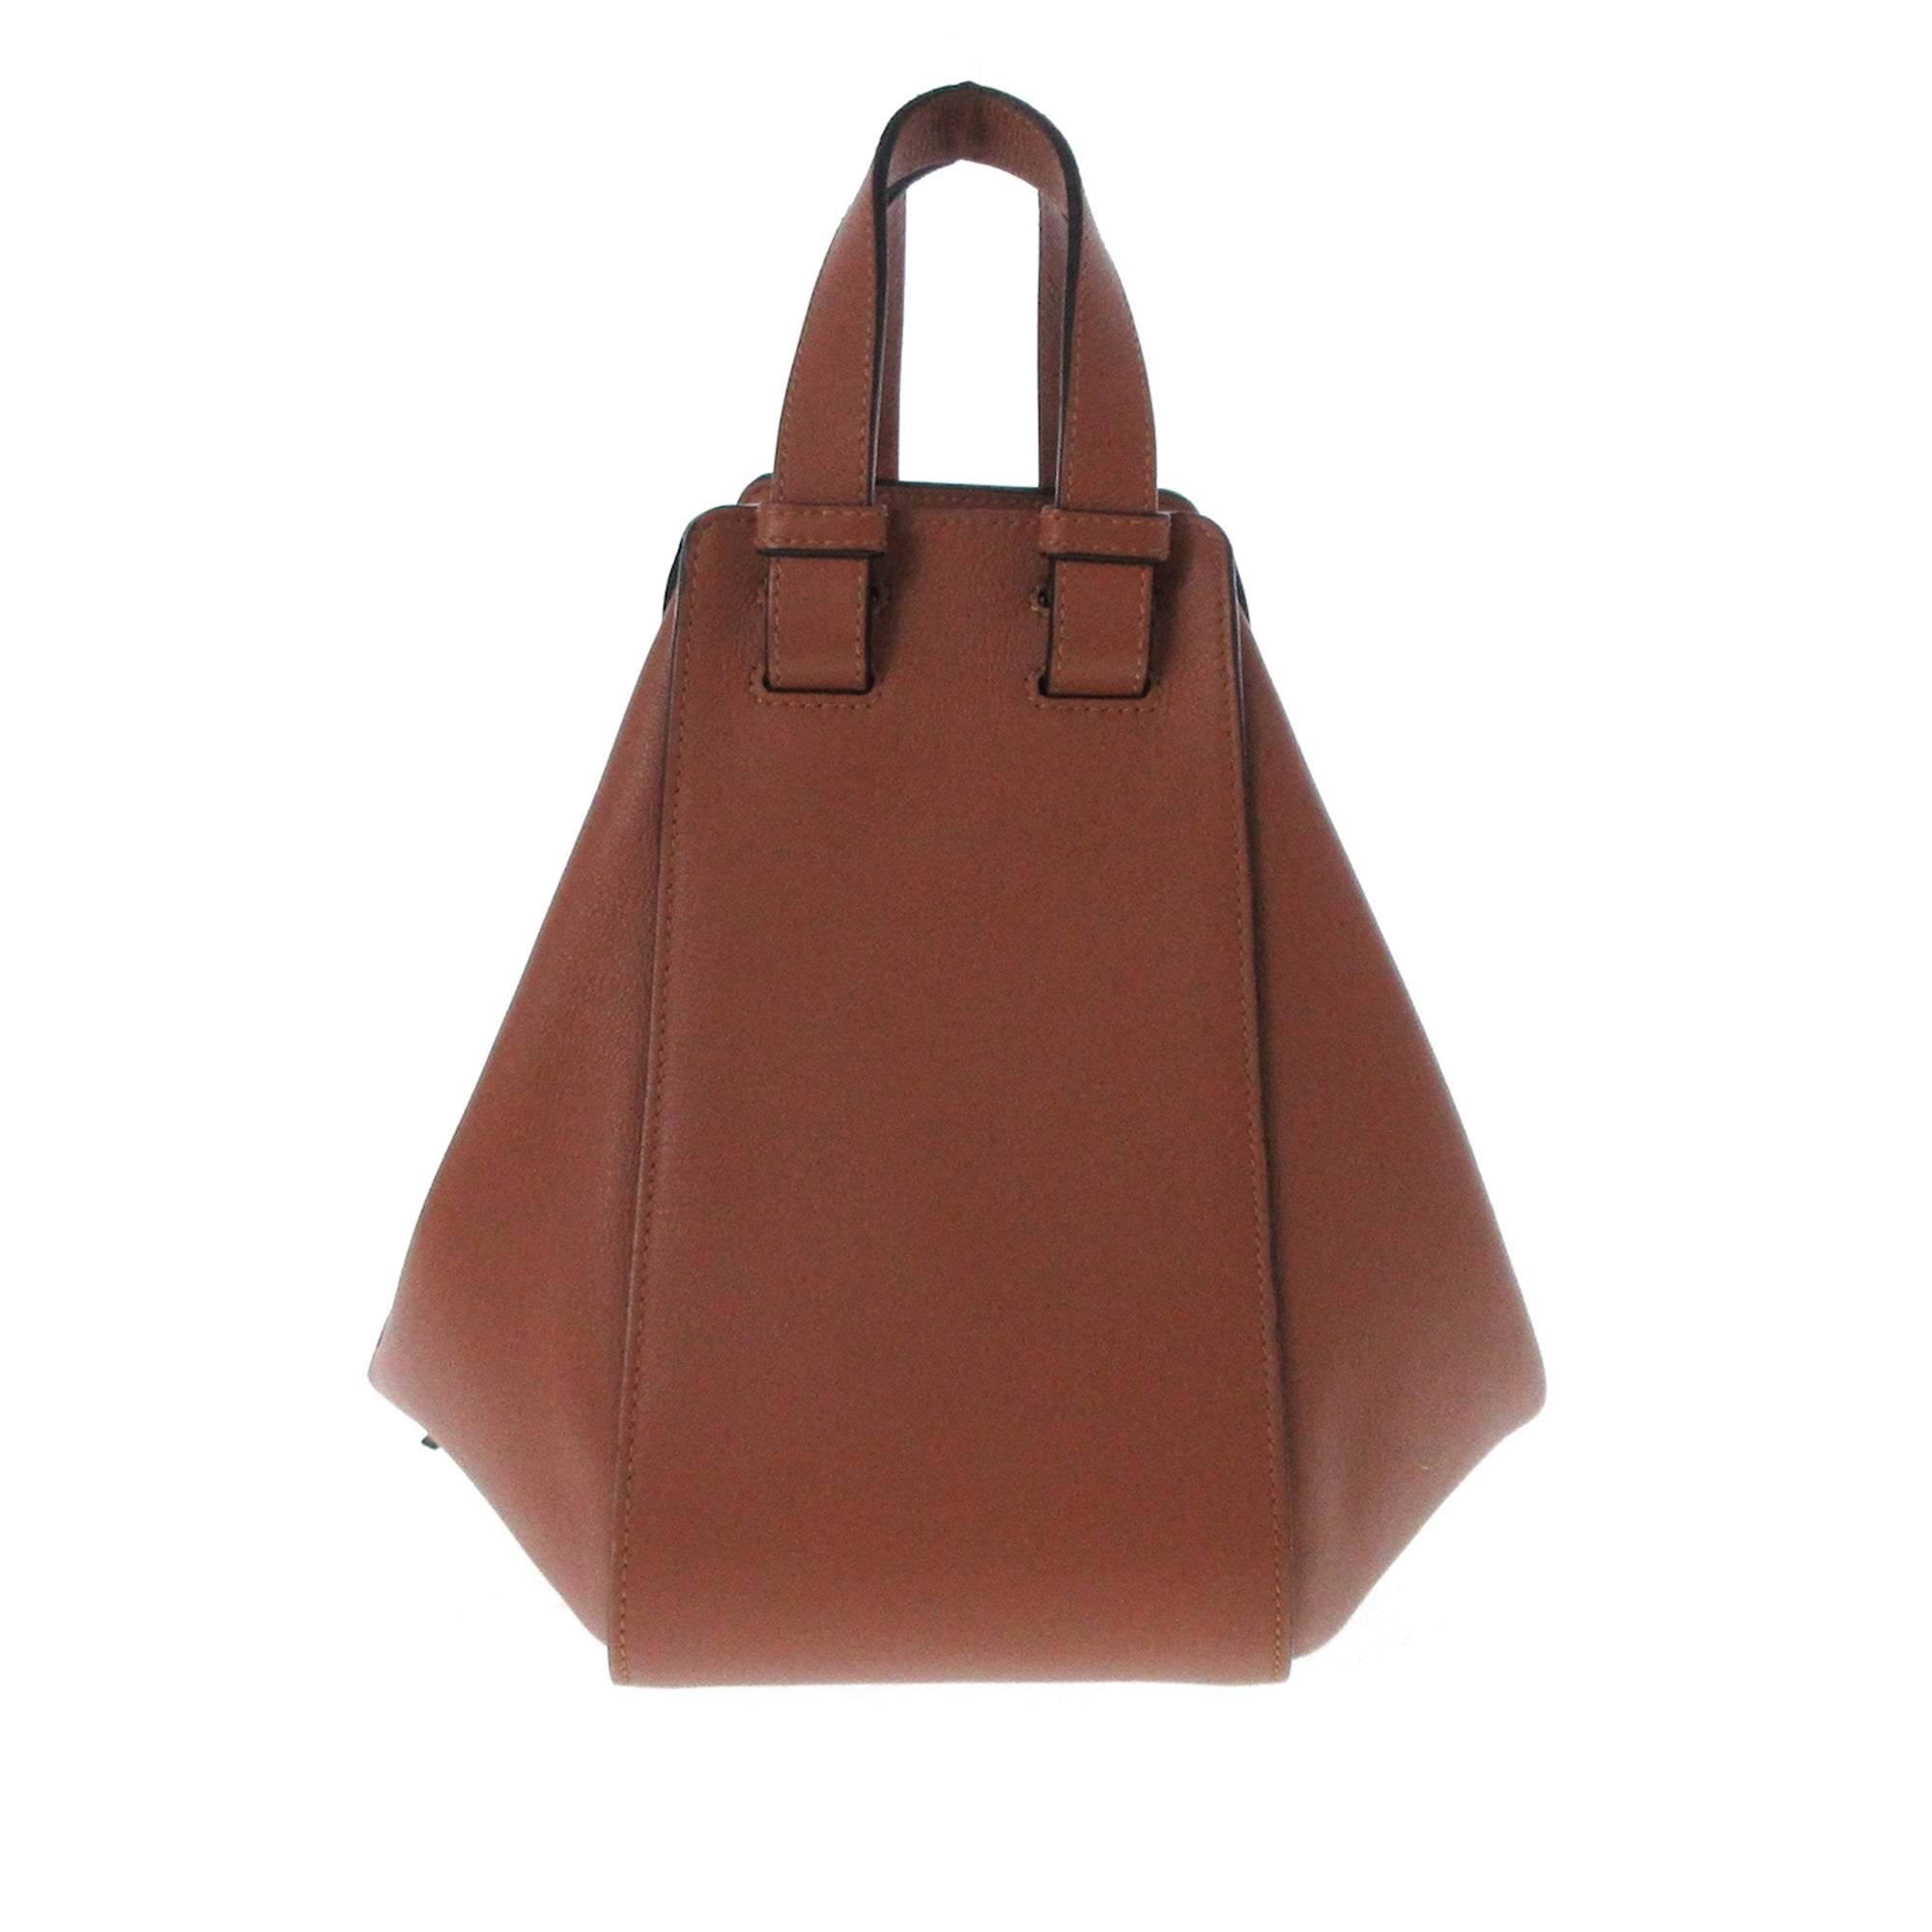 Loewe Small Hammock Leather Shoulder Bag